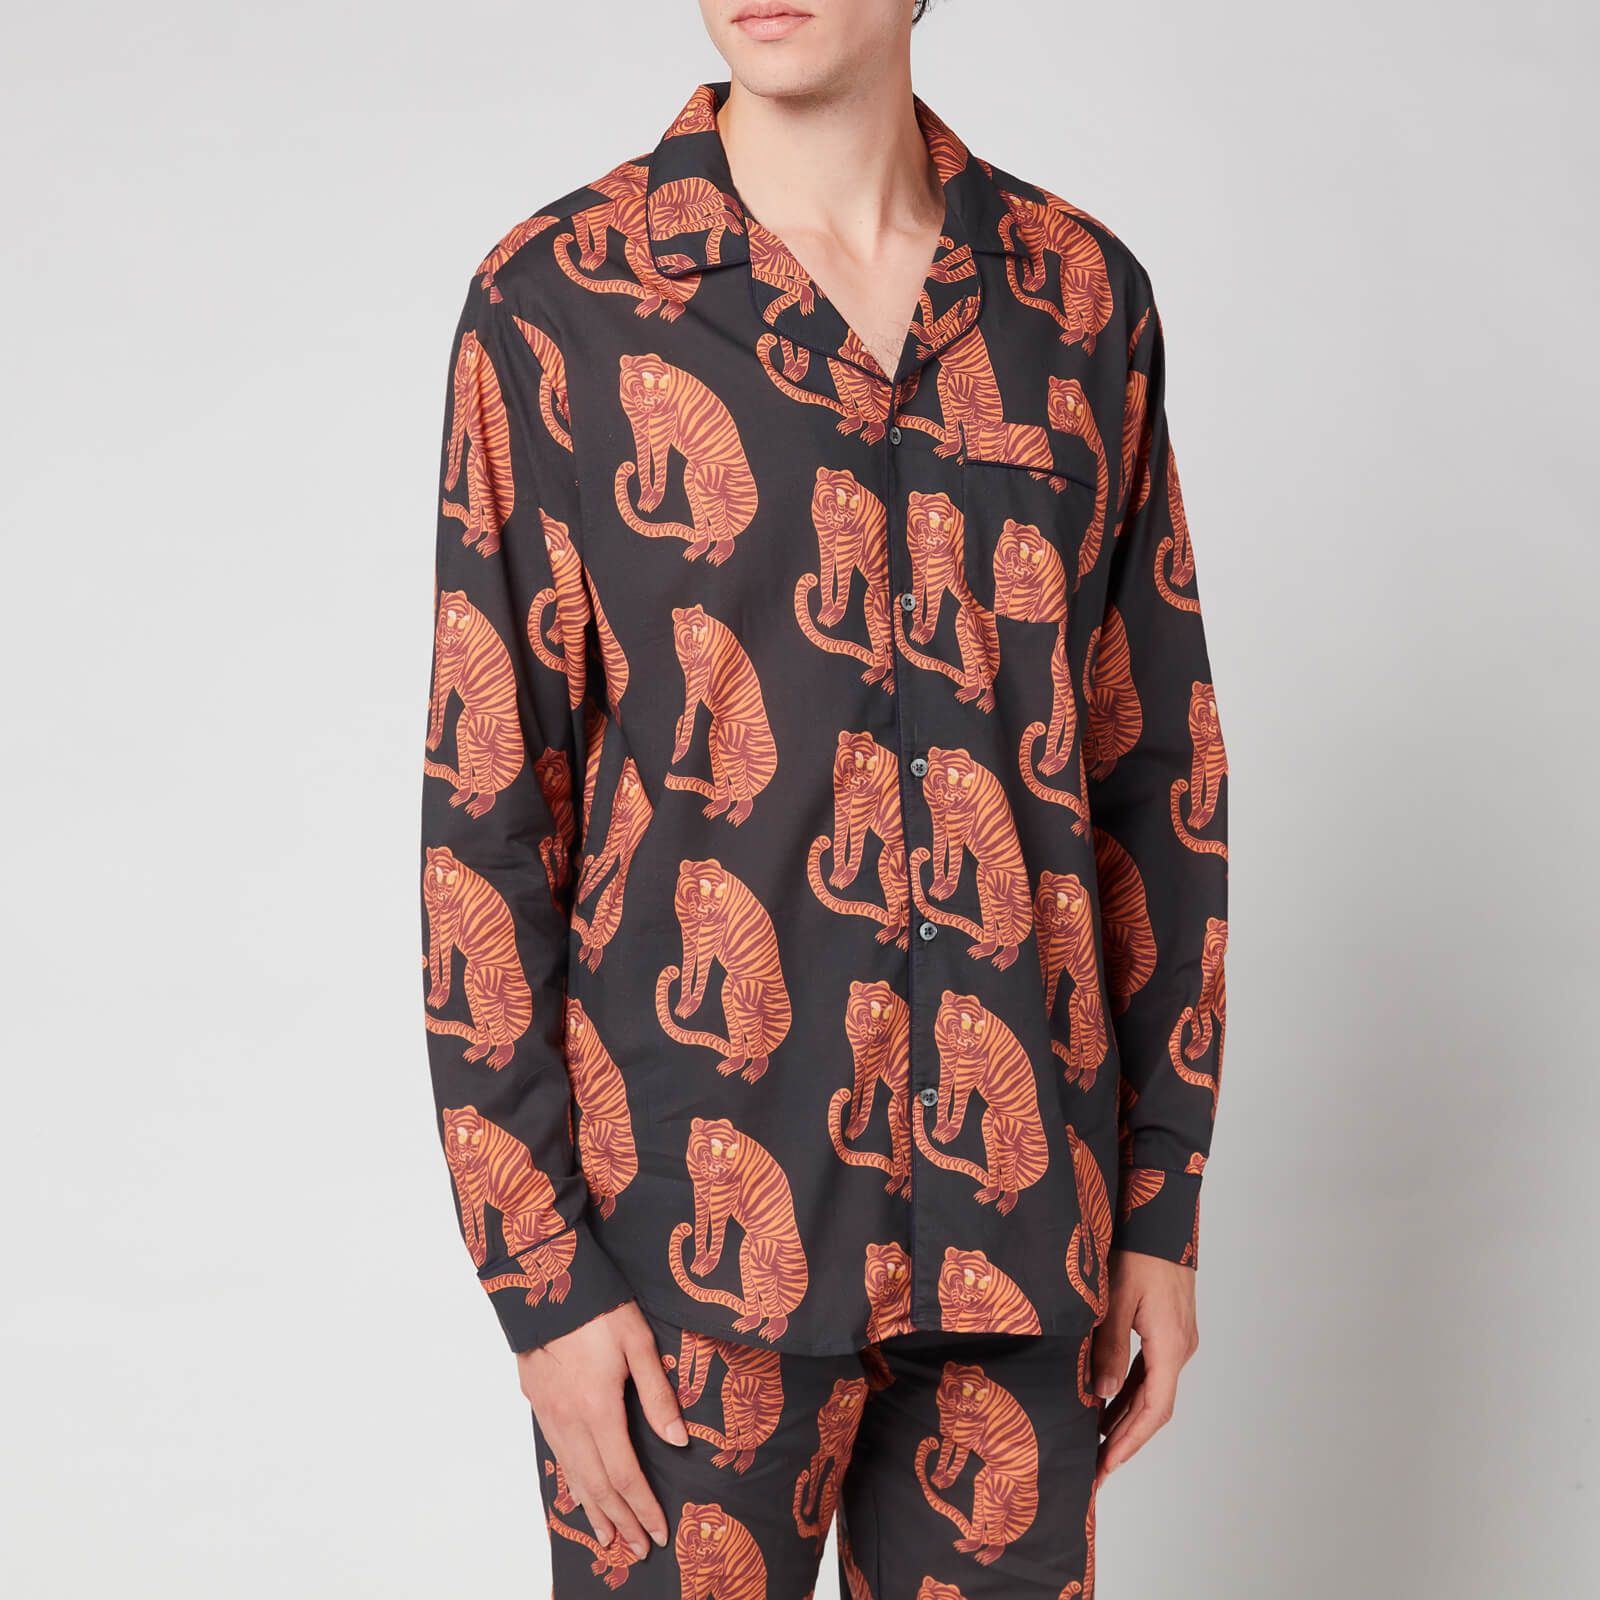 Desmond & Dempsey Men's Tiger Print Collared Shirt - Black/Orange - S